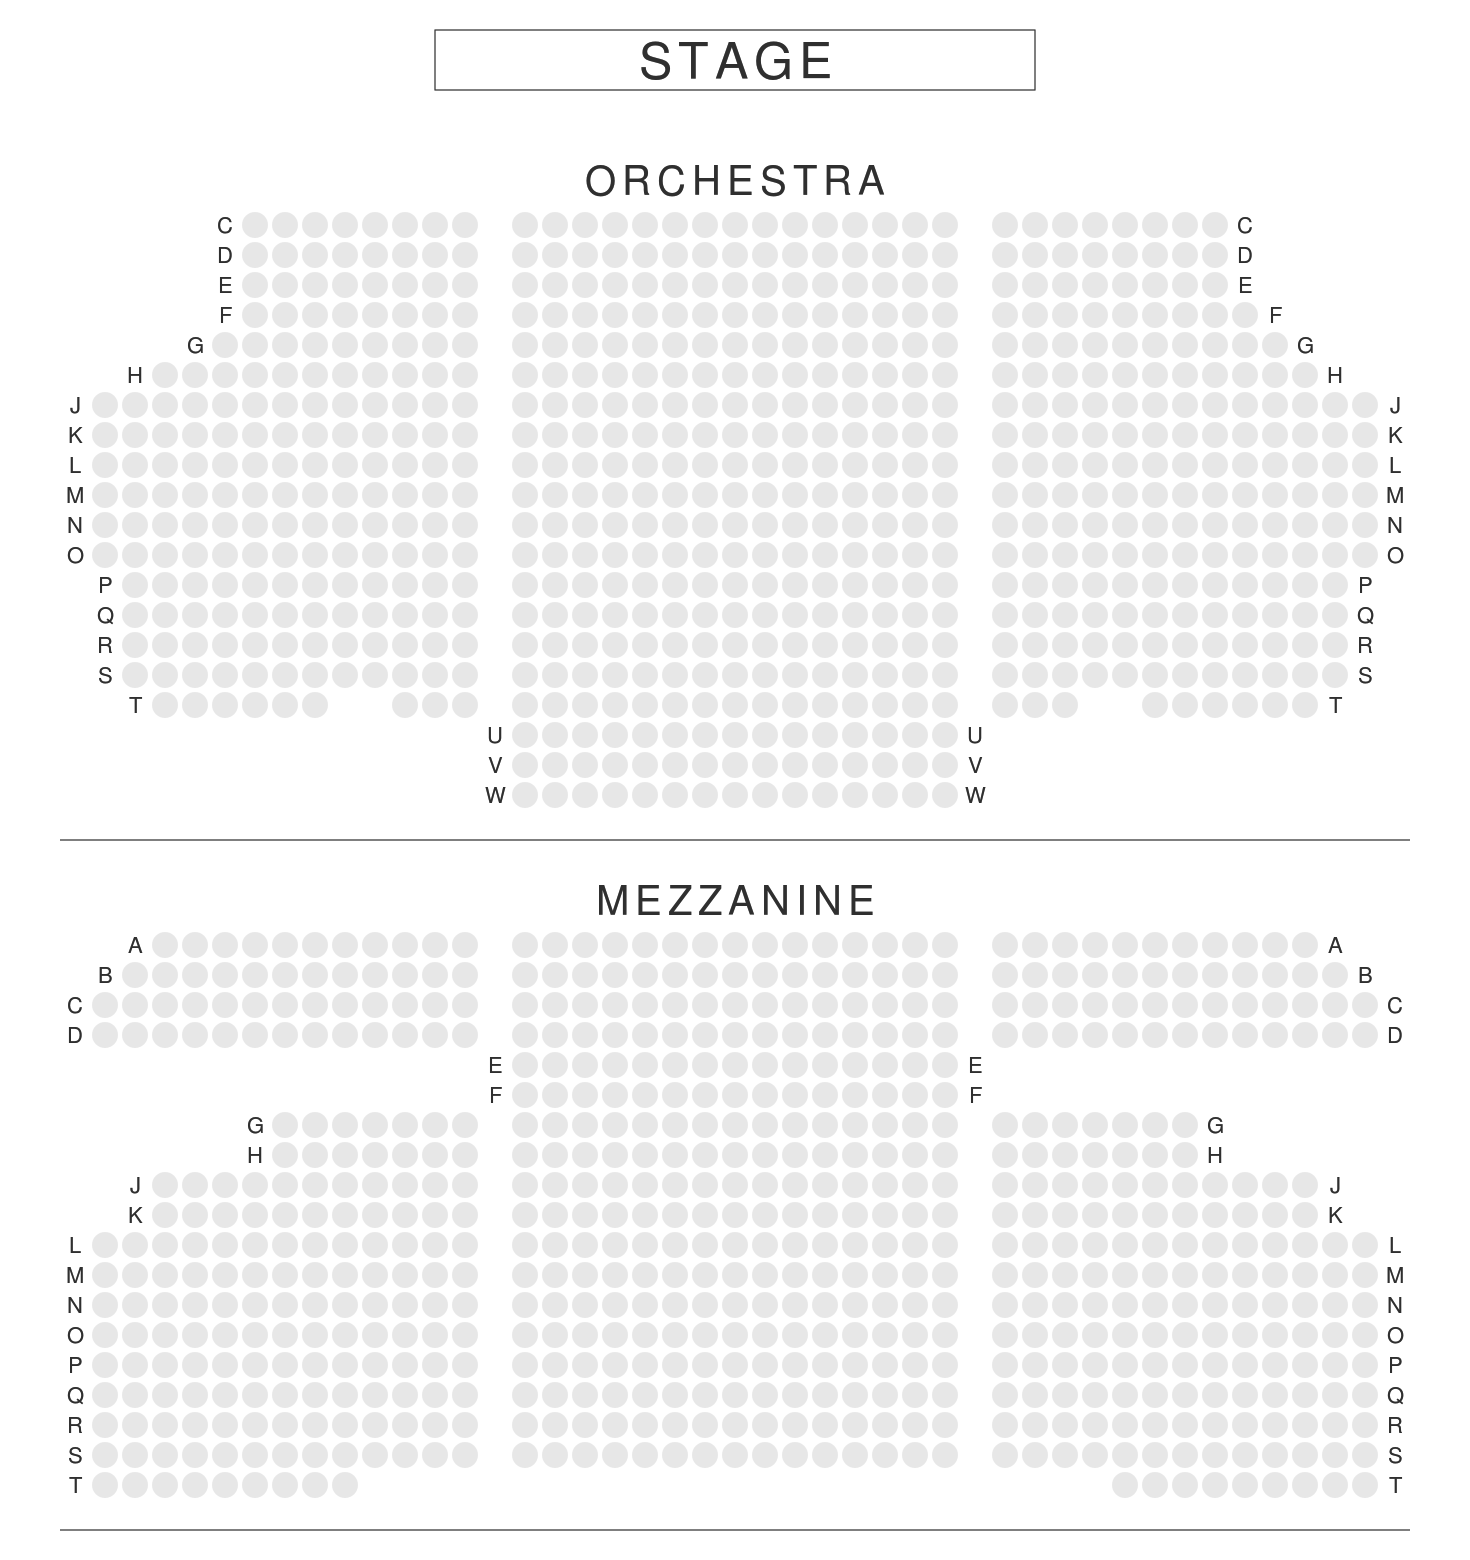 al-hirschfeld-theatre-seating-plan-new-york.png